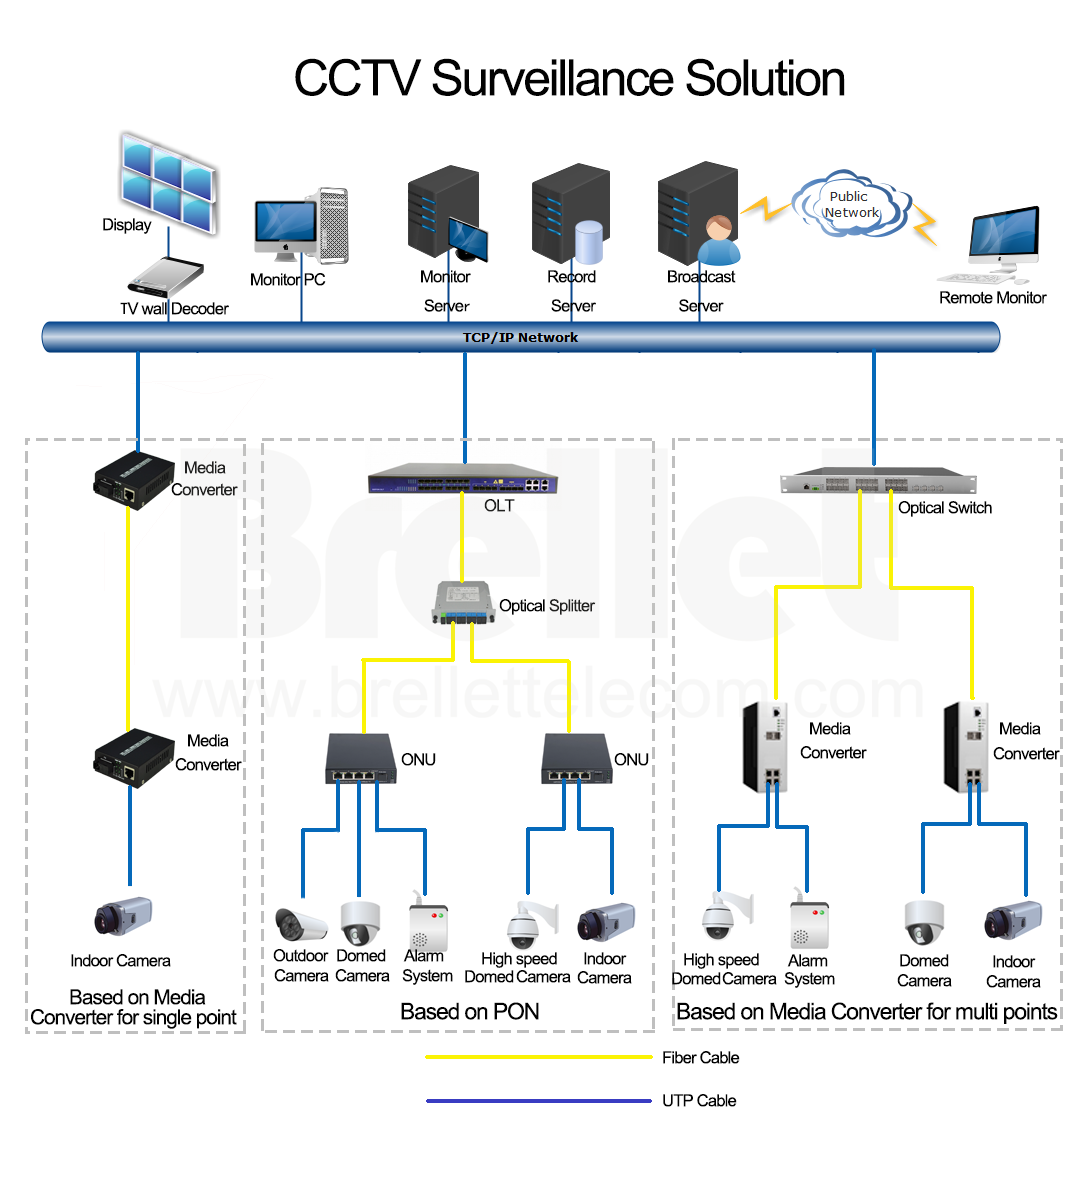 CCTV Surveillance Solution